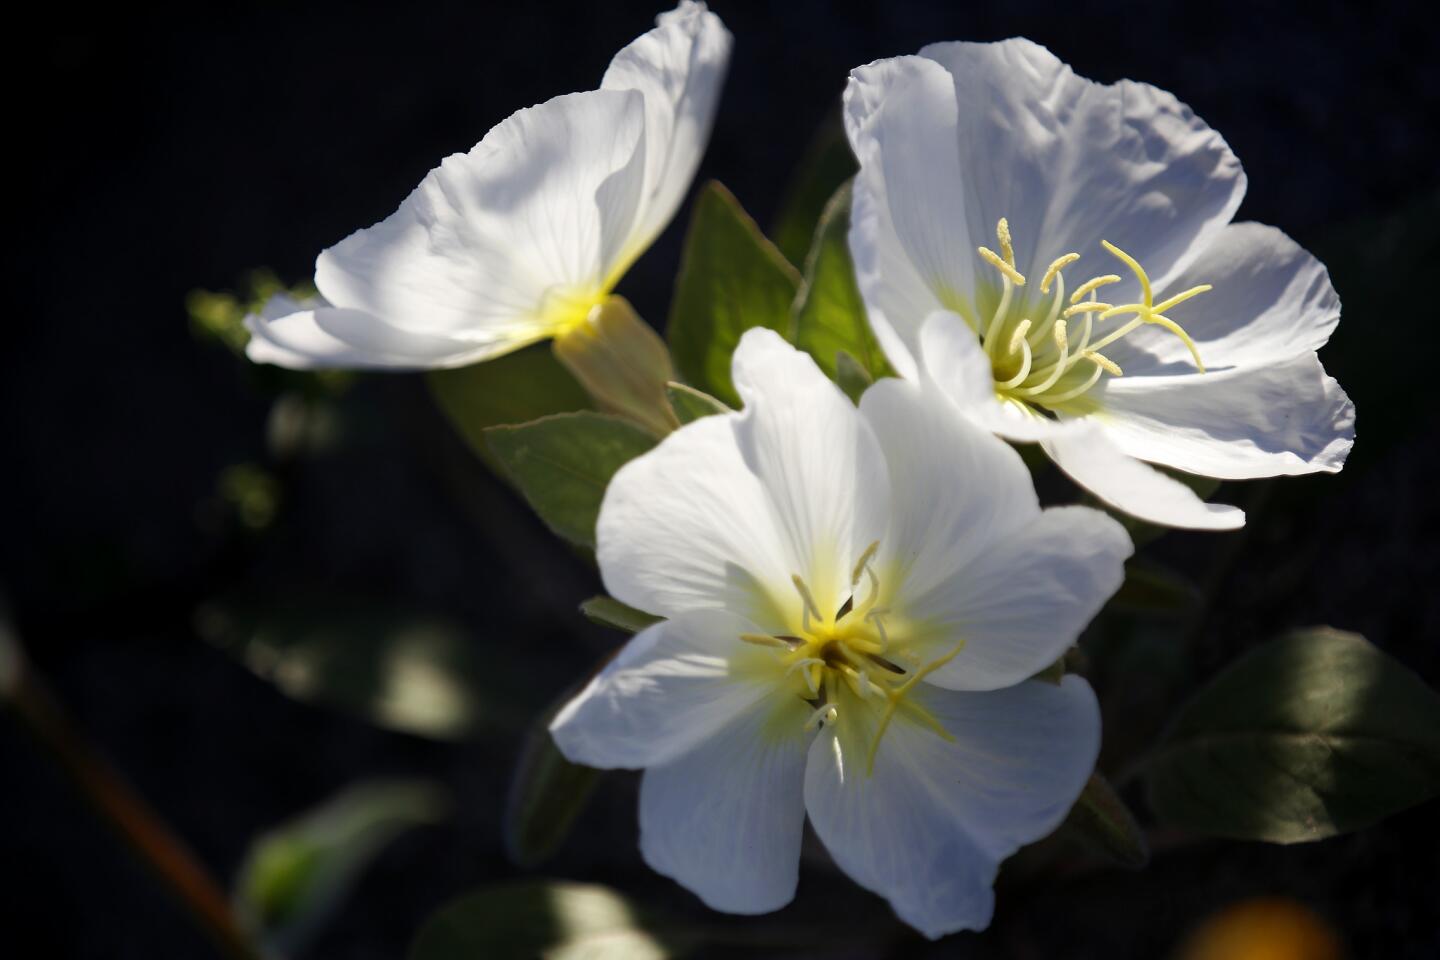 Anza-Borrego wildflower bloom